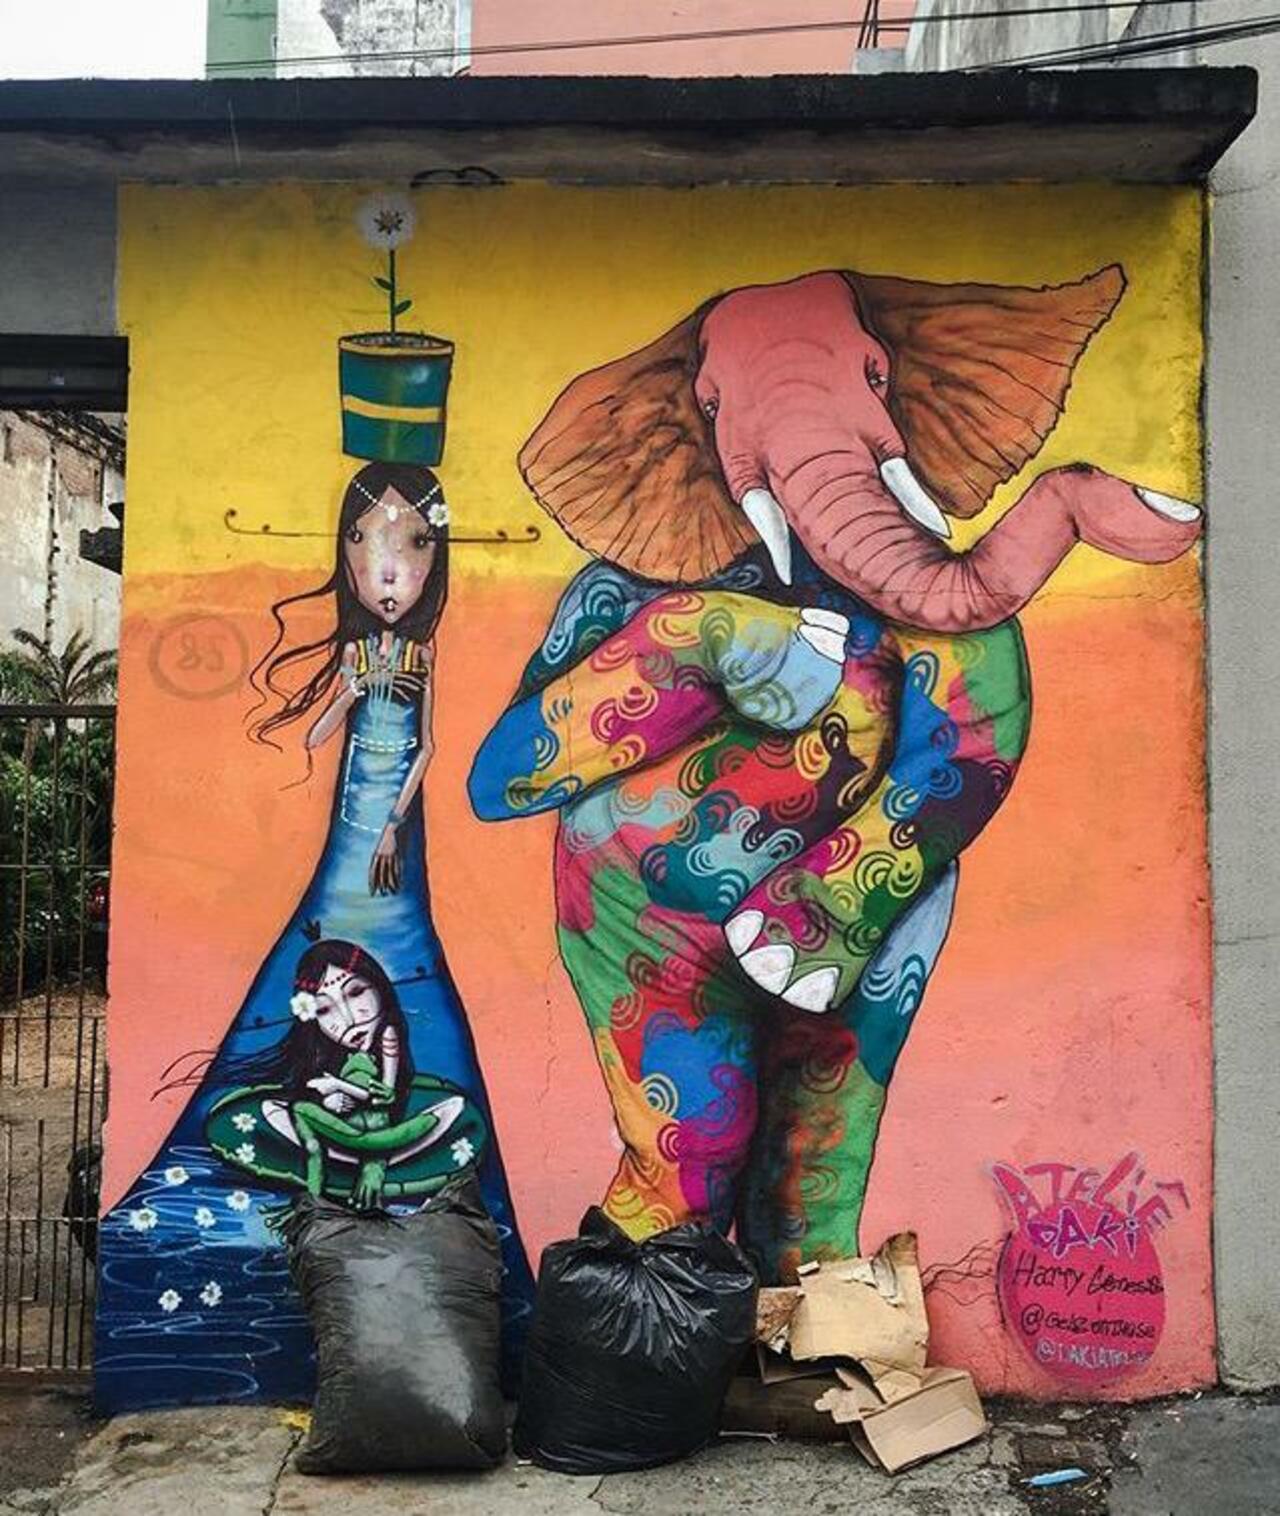 Street Art by Harry Geneis & Gelson in São Paulo #art #mural #graffiti #streetart http://t.co/SlLbhuMZfD … … …… … http://twitter.com/charlesjackso14/status/648021464147460096